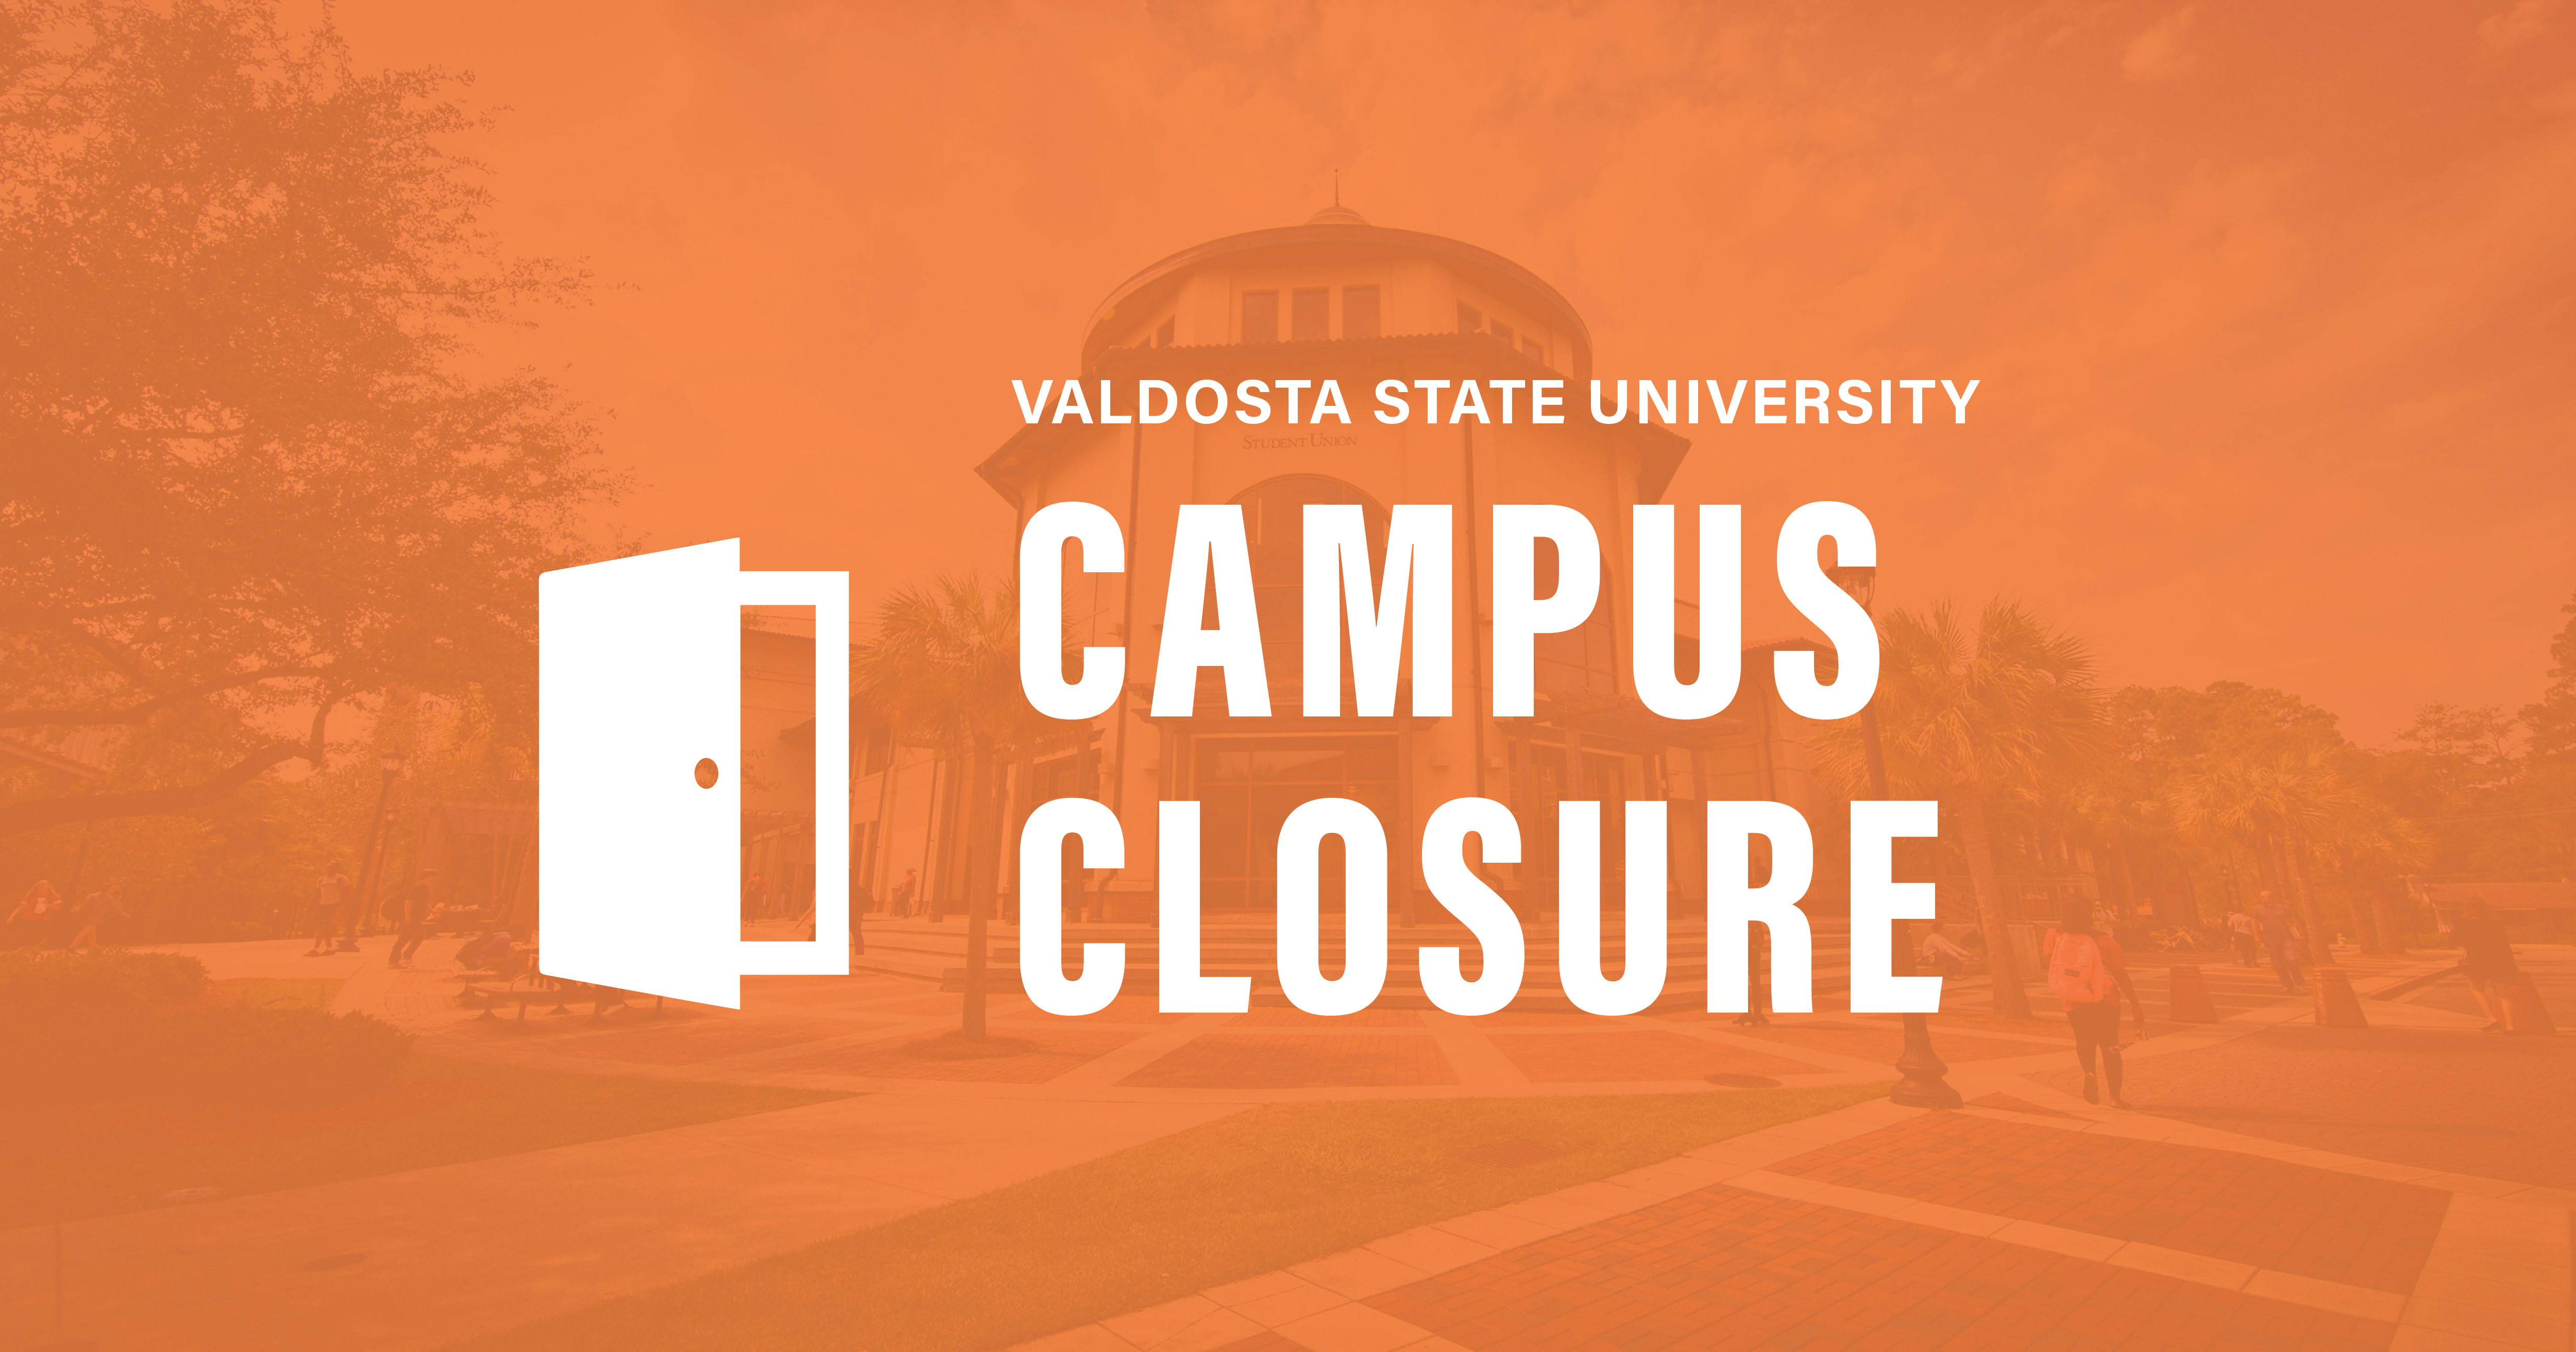 fb-emergency-comms-campus-closure-graphics4.jpg